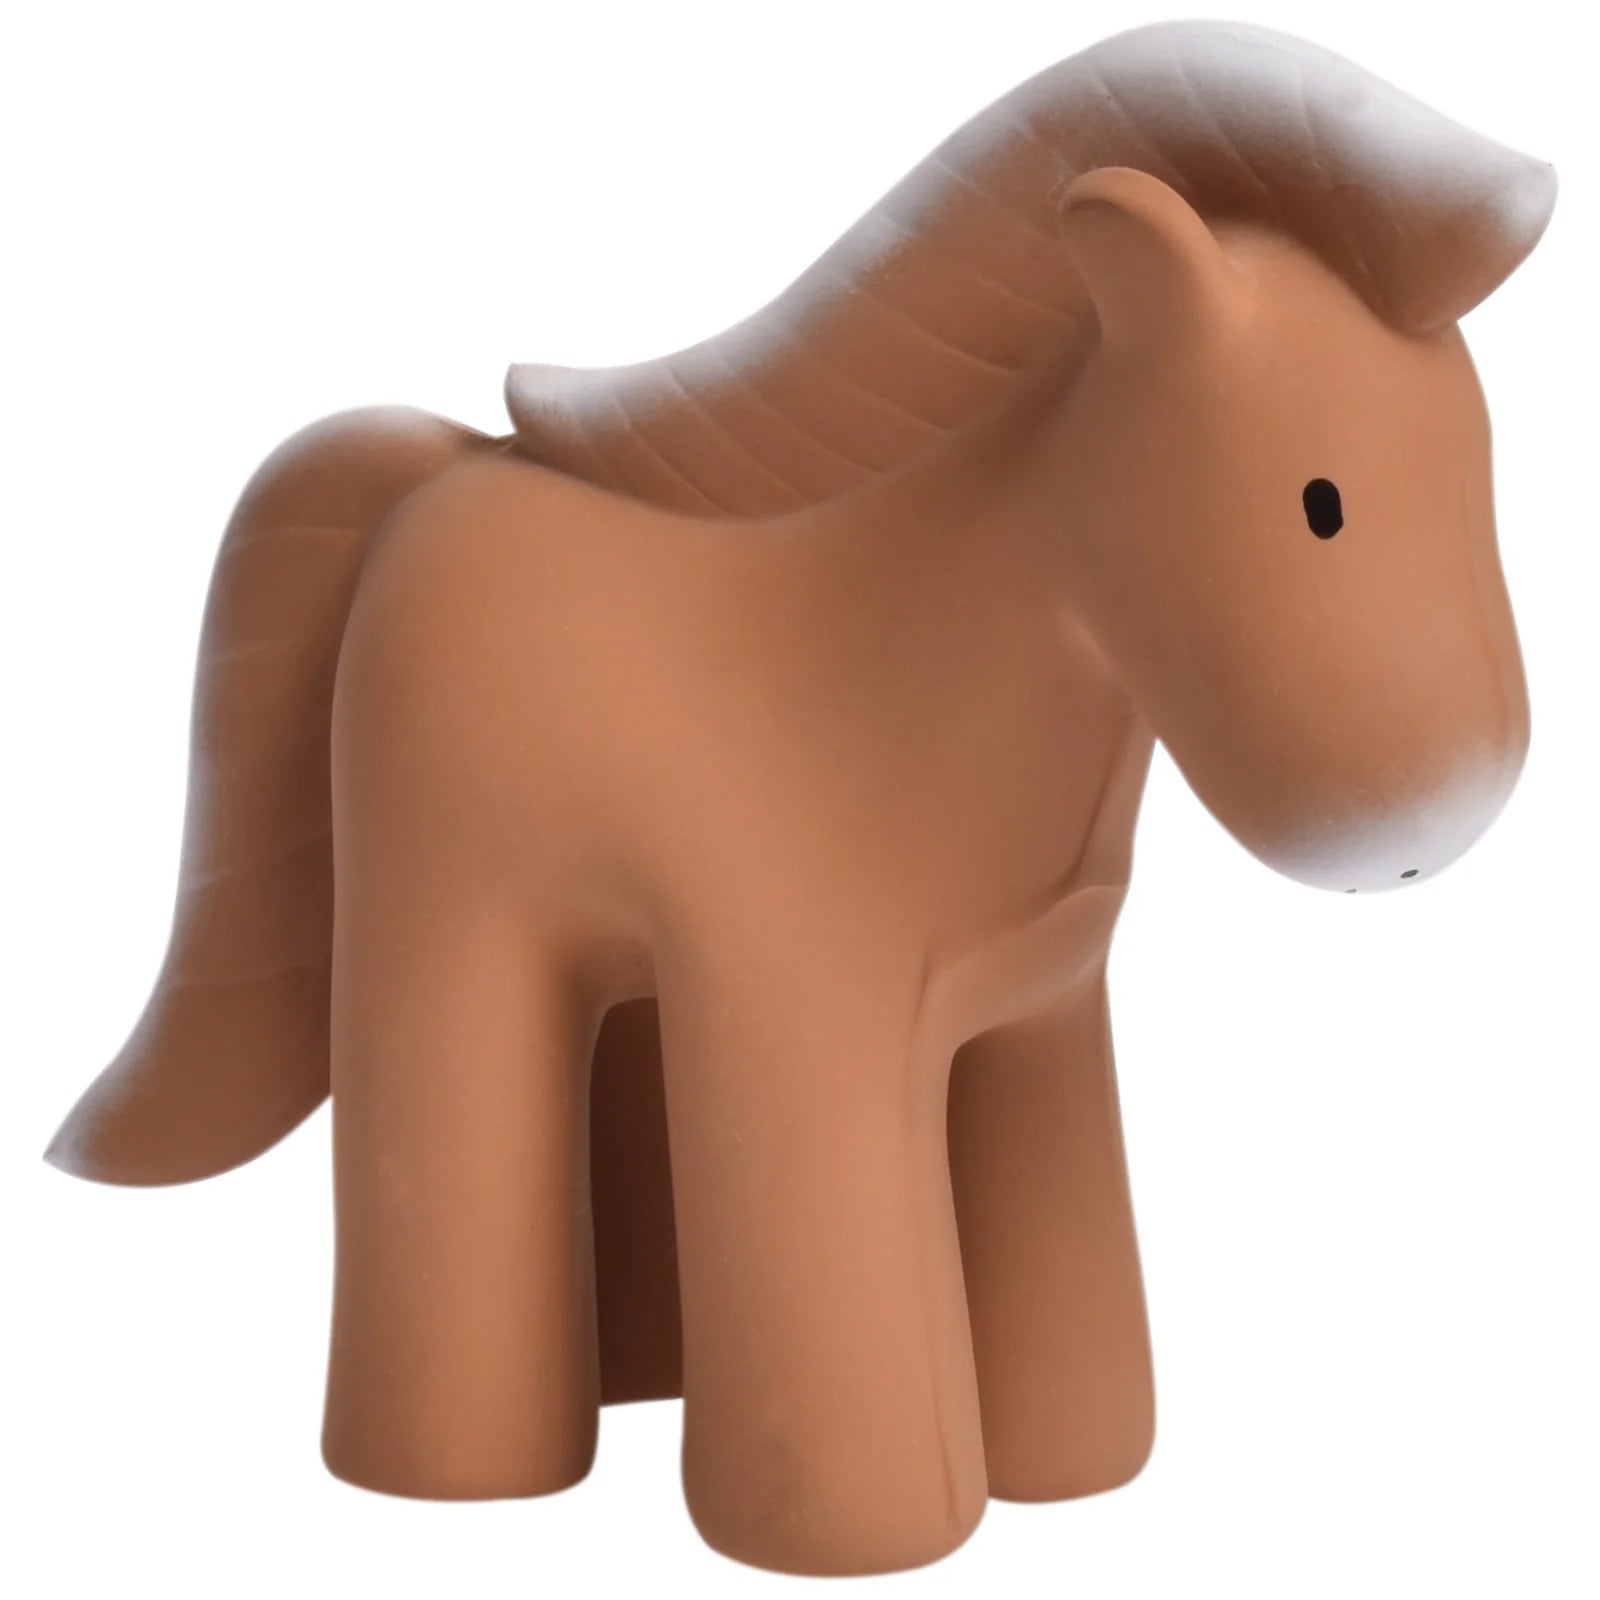 Horse Natural Organic Rubber Toy | Tikiri Toys